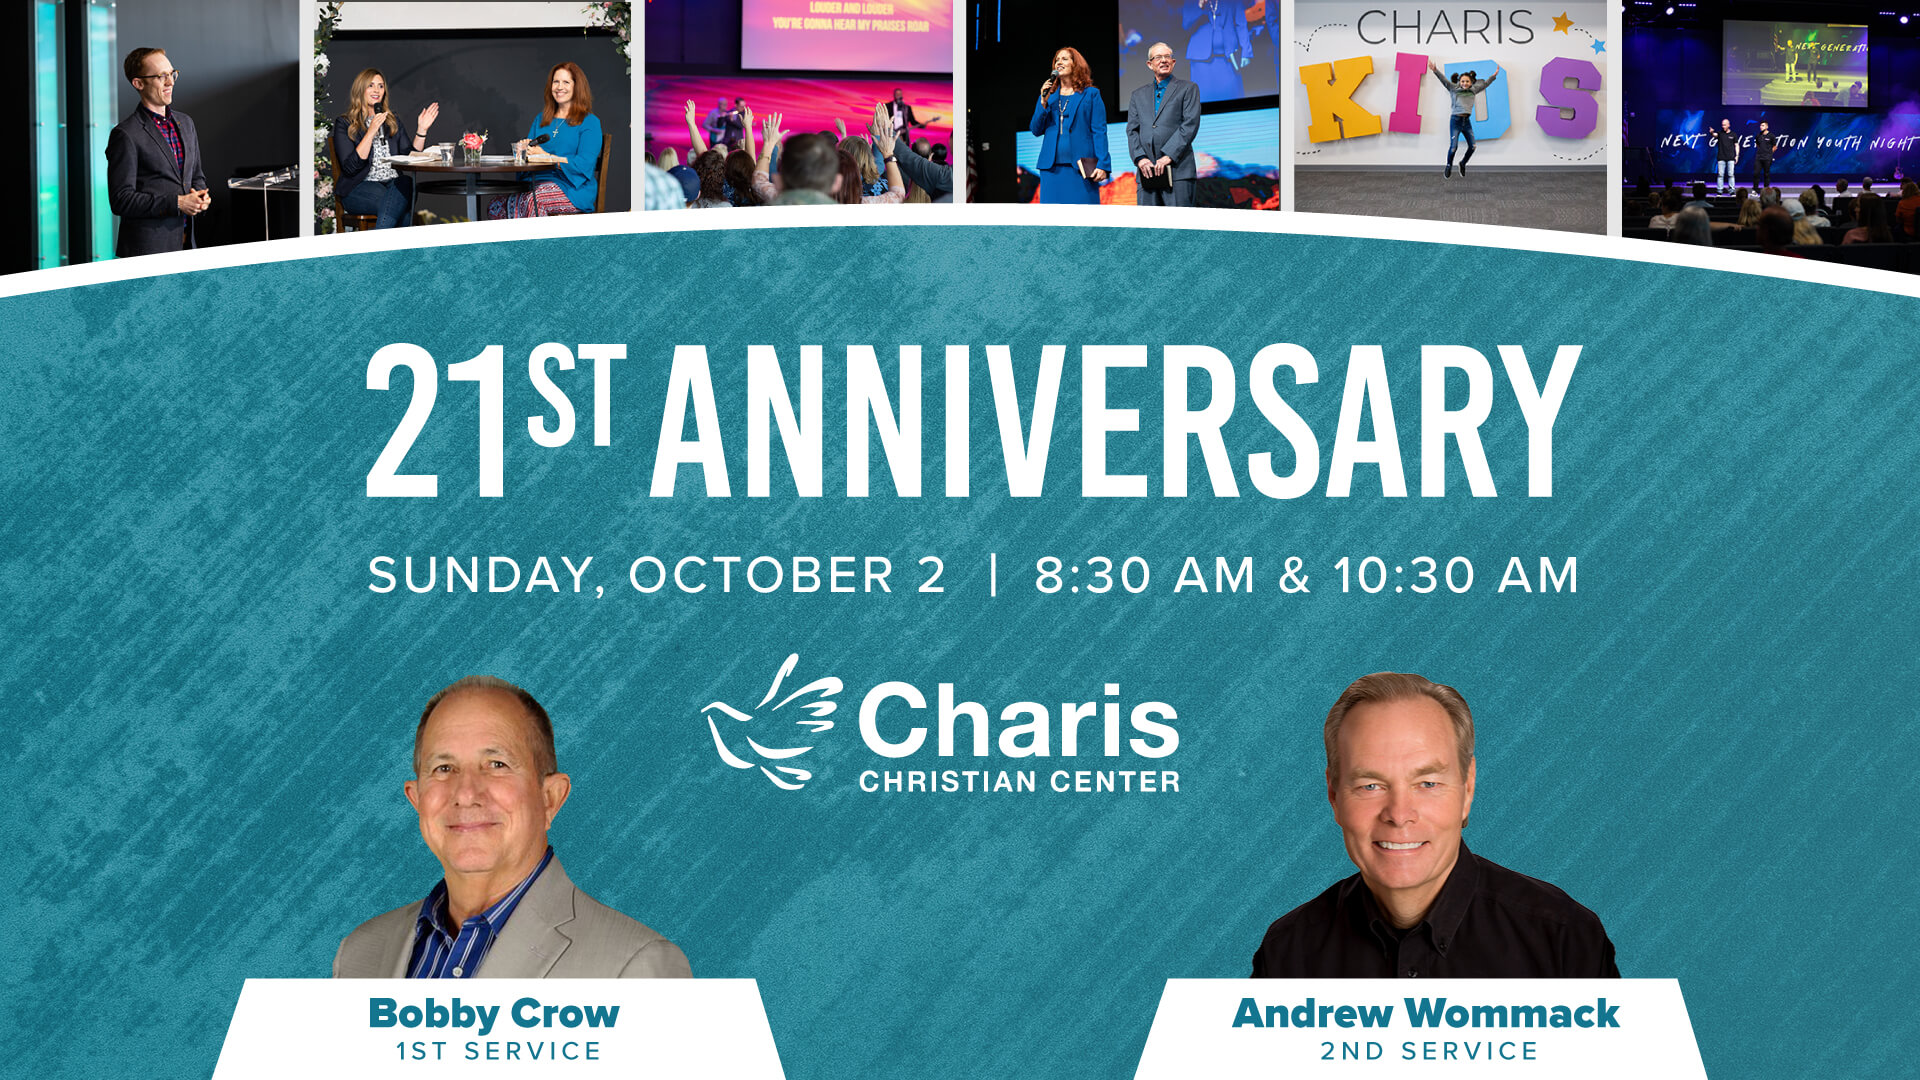 21st Anniversary of Charis Christian Center